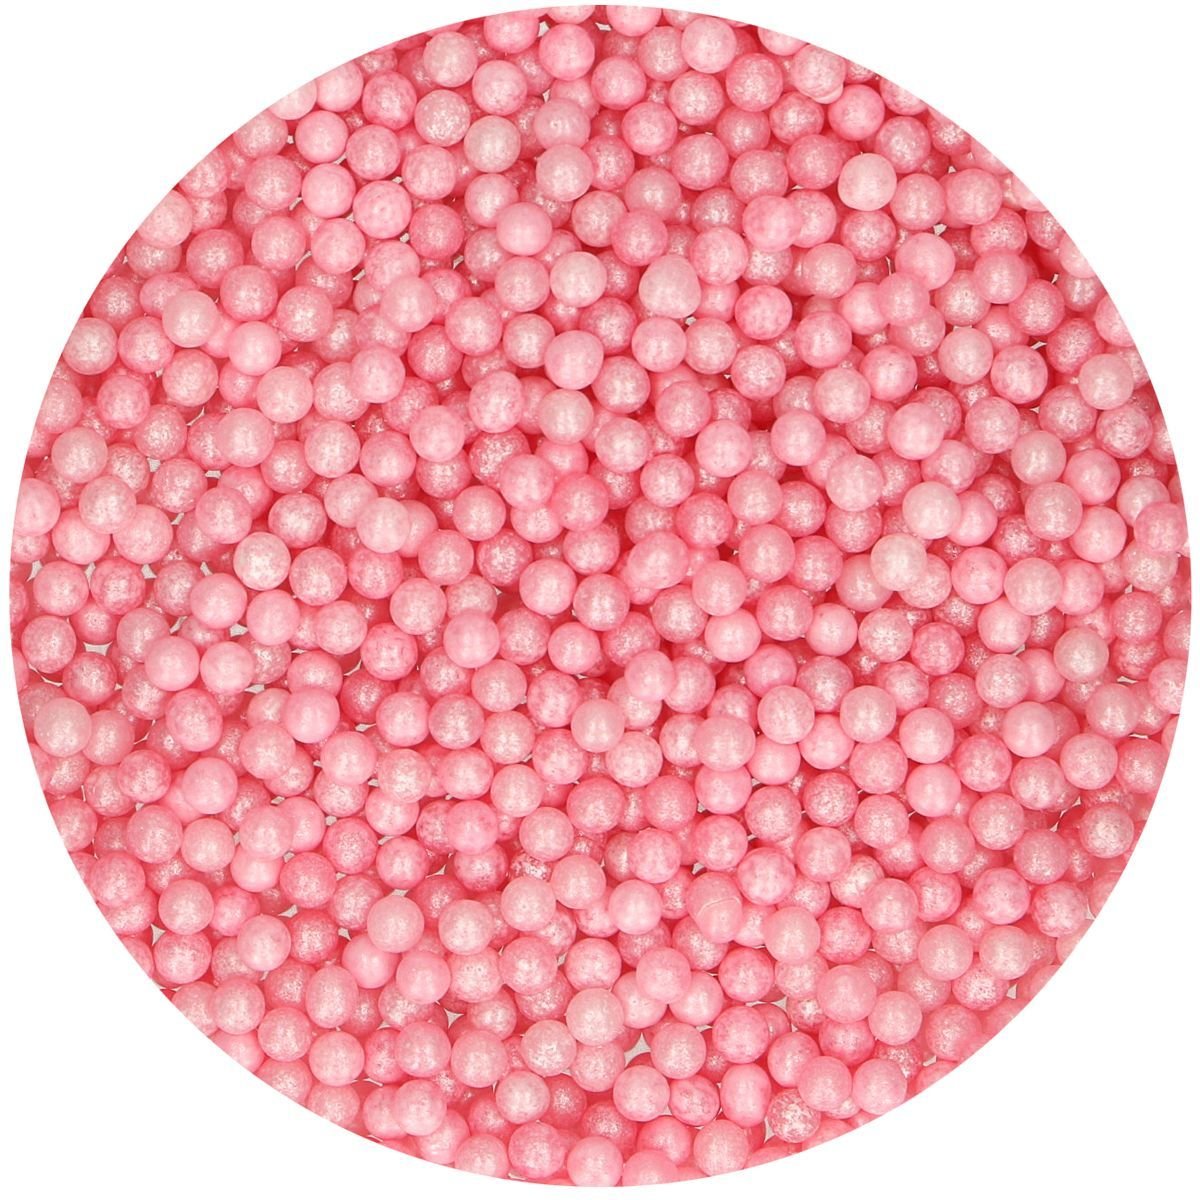 FunCakes Sugar Pearls -4mm PEARL PINK 80g - Μείγμα Ζαχαρωτών Πέρλες Ροζ Περλέ ∞∞∞